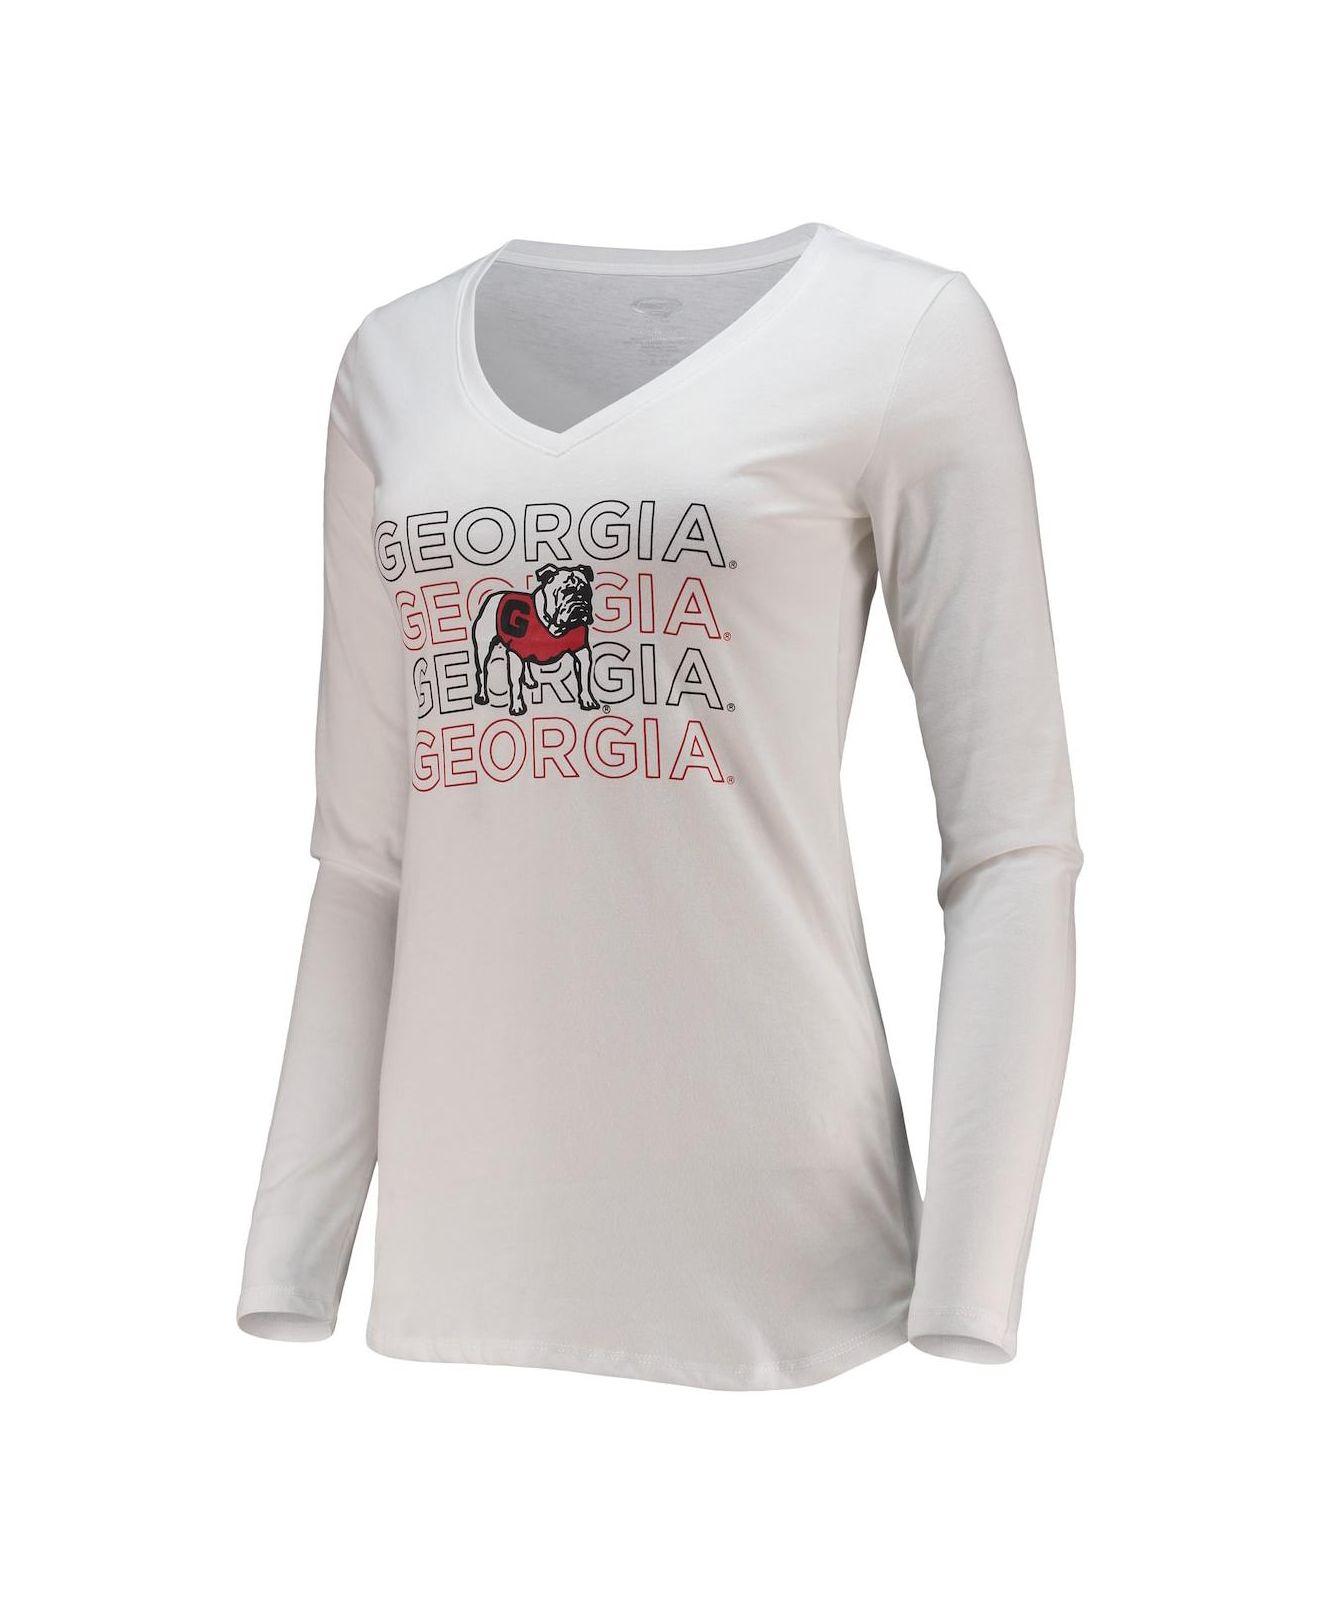 Women's Concepts Sport White/Red Washington Nationals Flagship Long Sleeve  V-Neck T-Shirt & Pants Sleep Set